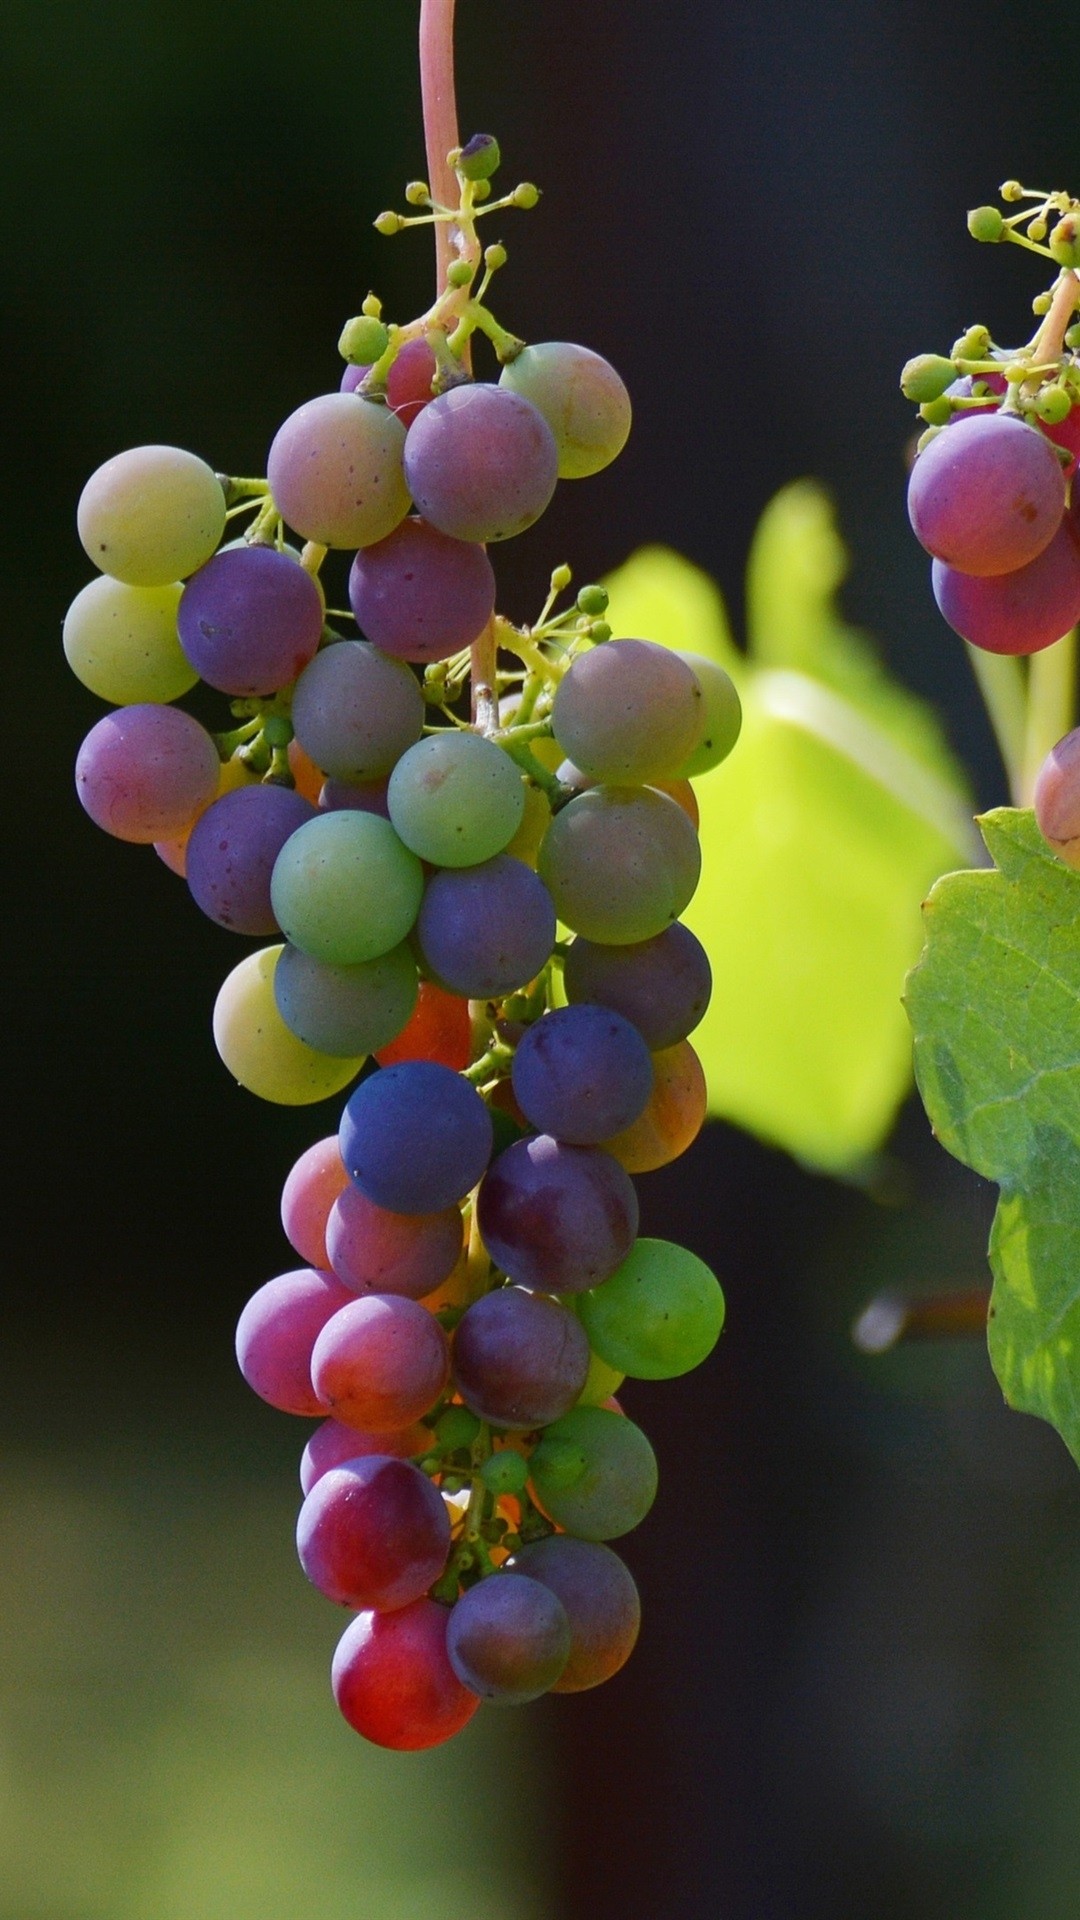 Vineyard Vines wallpaper for iPhone